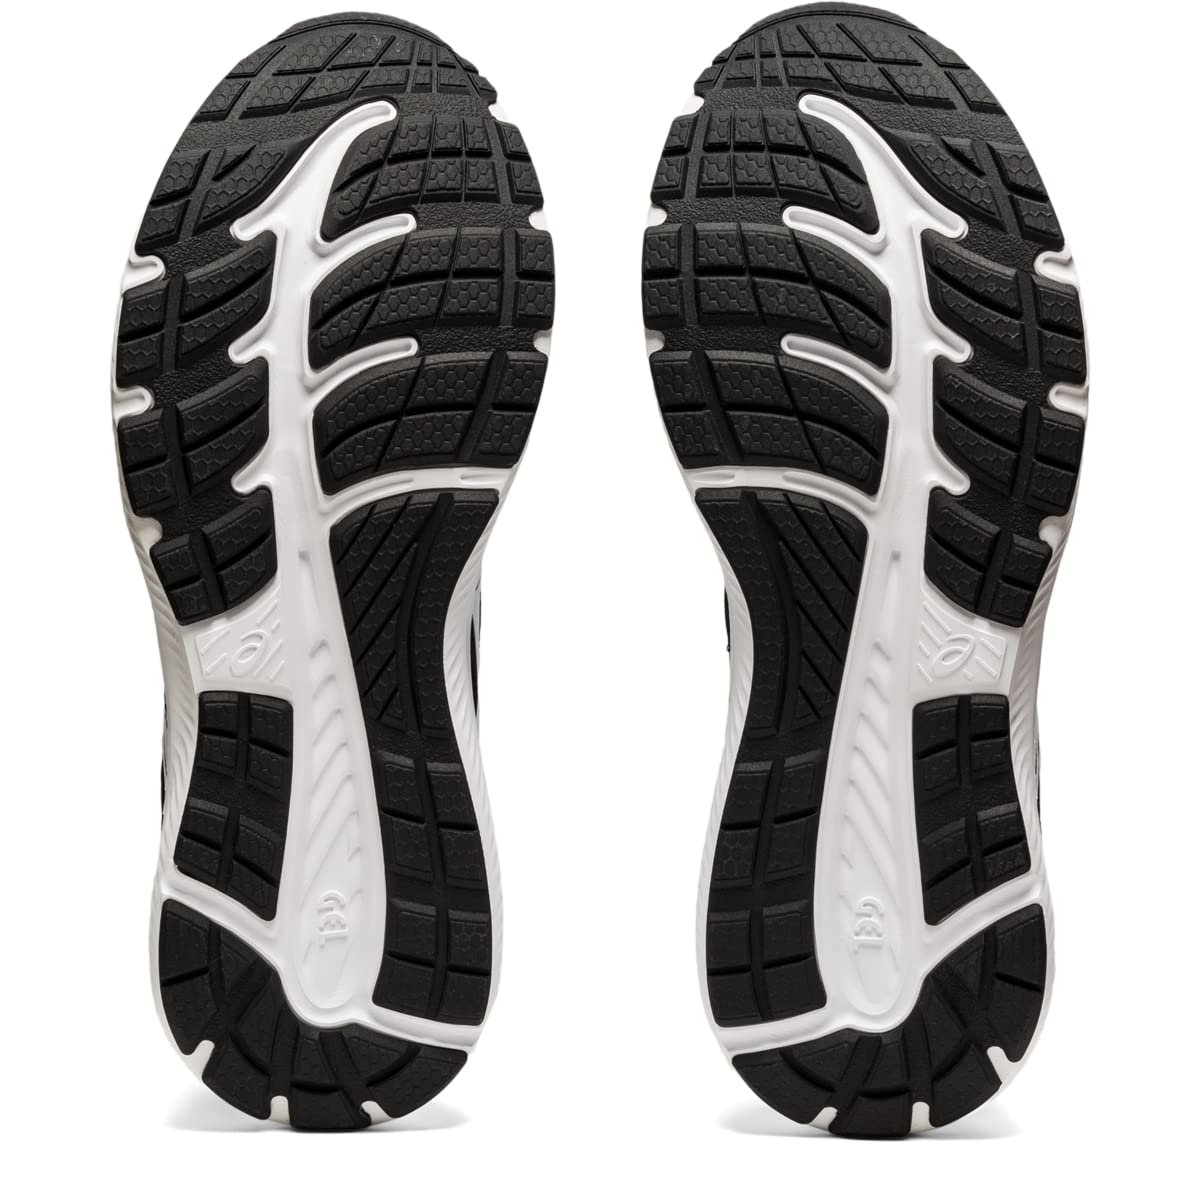 ASICS Men's Gel-Contend 7 Running Shoe